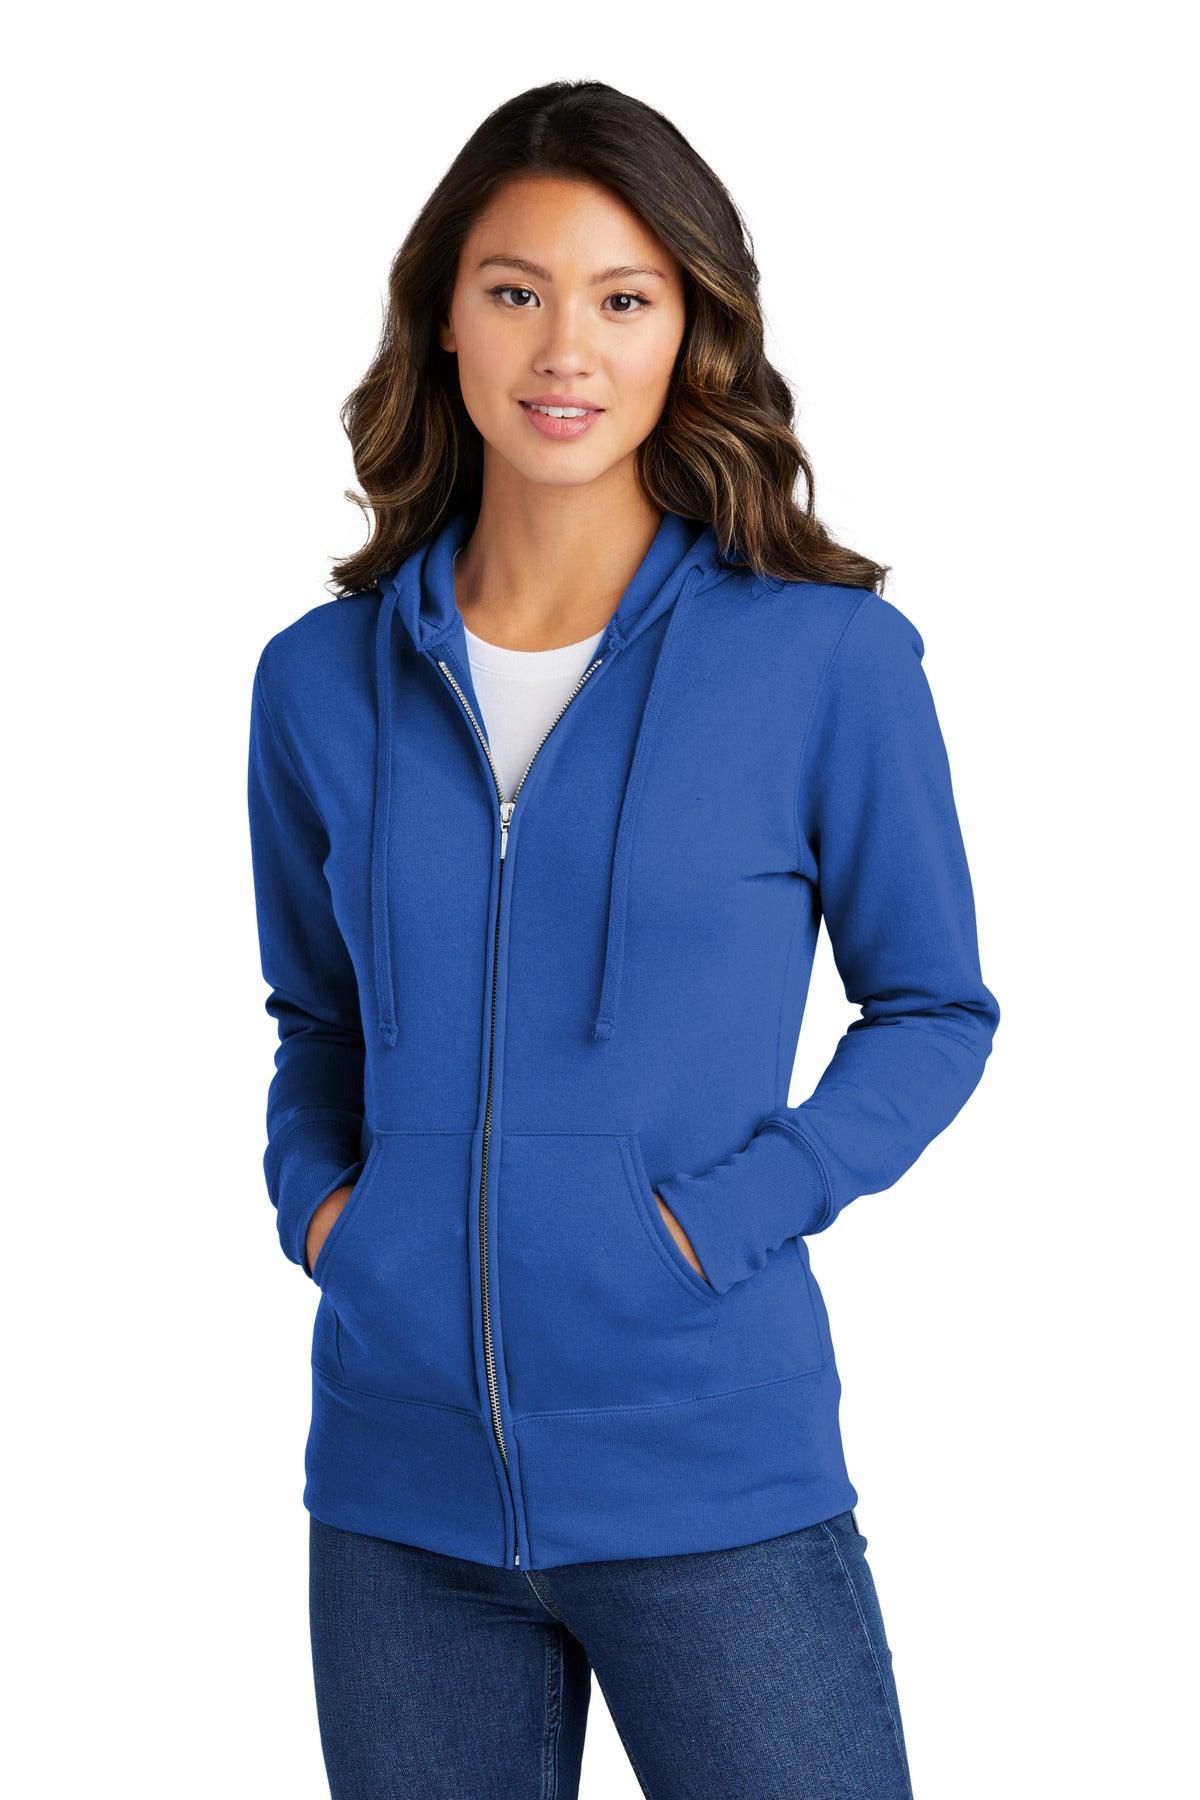 Port & Company Ladies Core Fleece Full-Zip Hooded Sweatshirt. LPC78ZH - Dresses Max